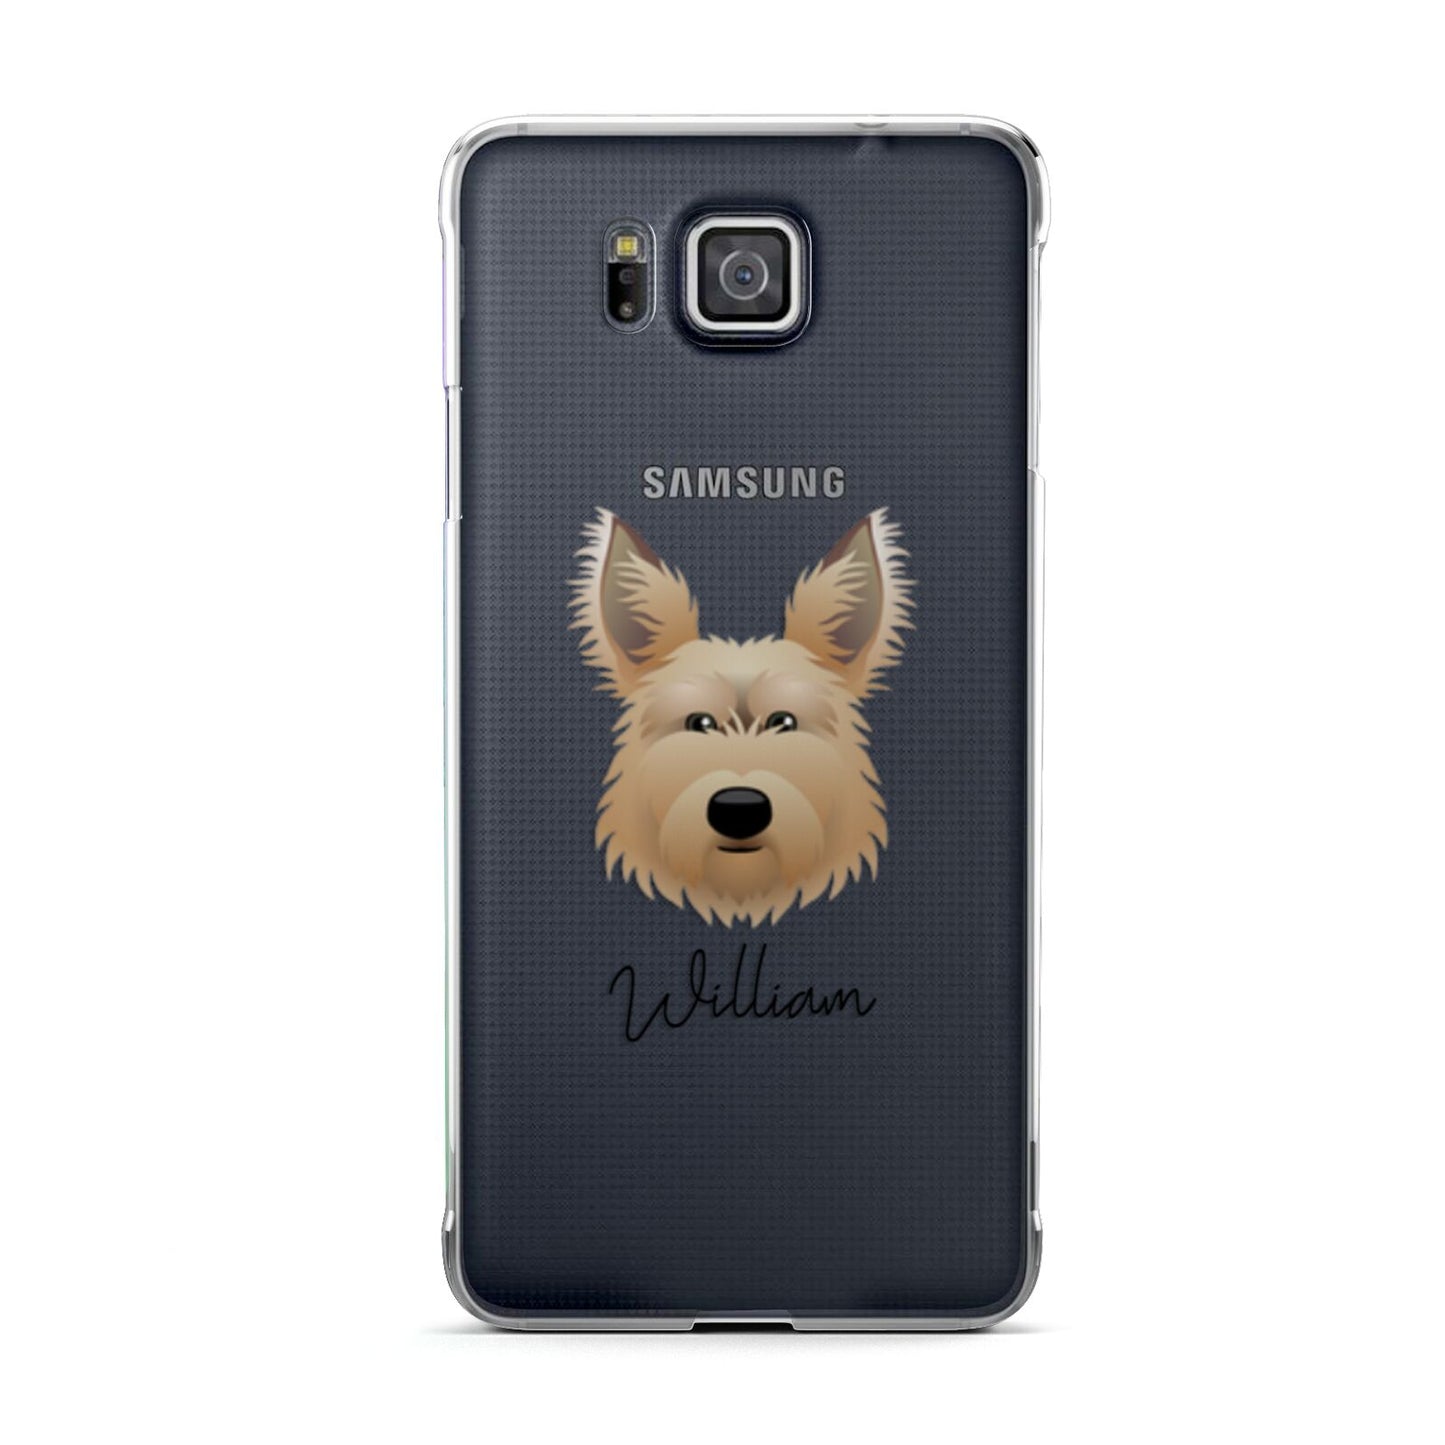 Picardy Sheepdog Personalised Samsung Galaxy Alpha Case